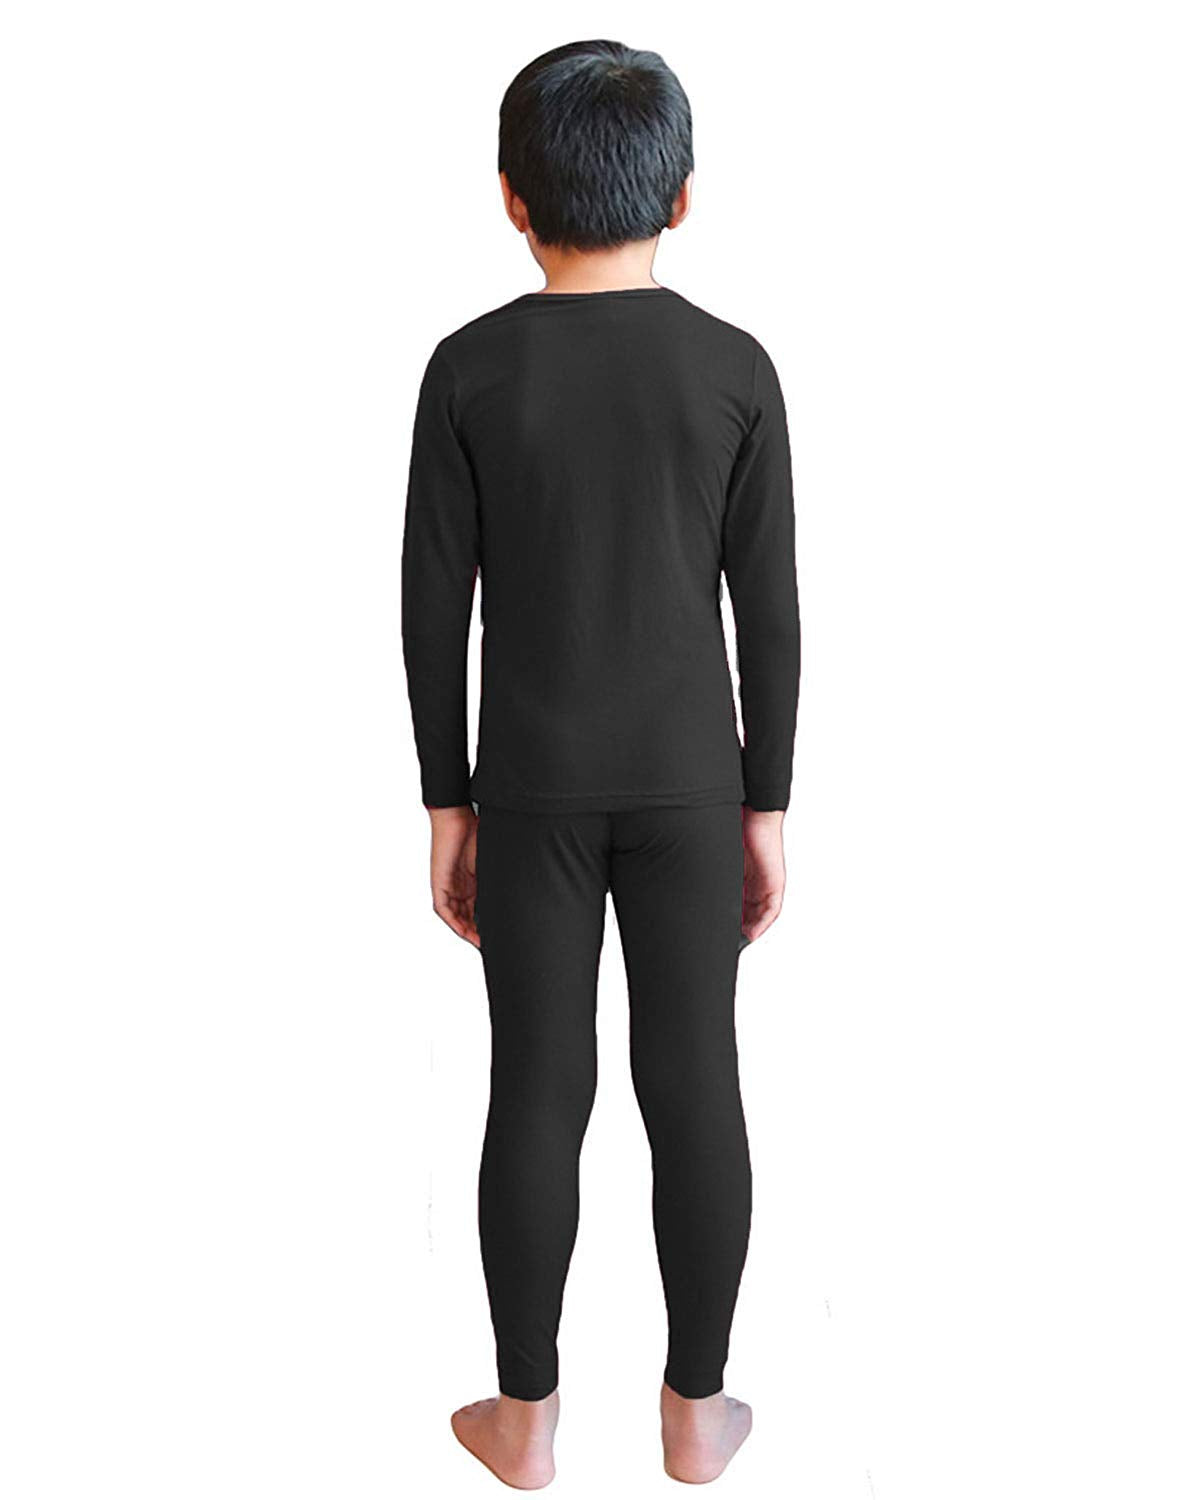 LANBAOSI Children's Boys Sleepwear Thermal Underwear Sets Fleece Lined Soft Long Johns Top & Bottom LANBAOSI